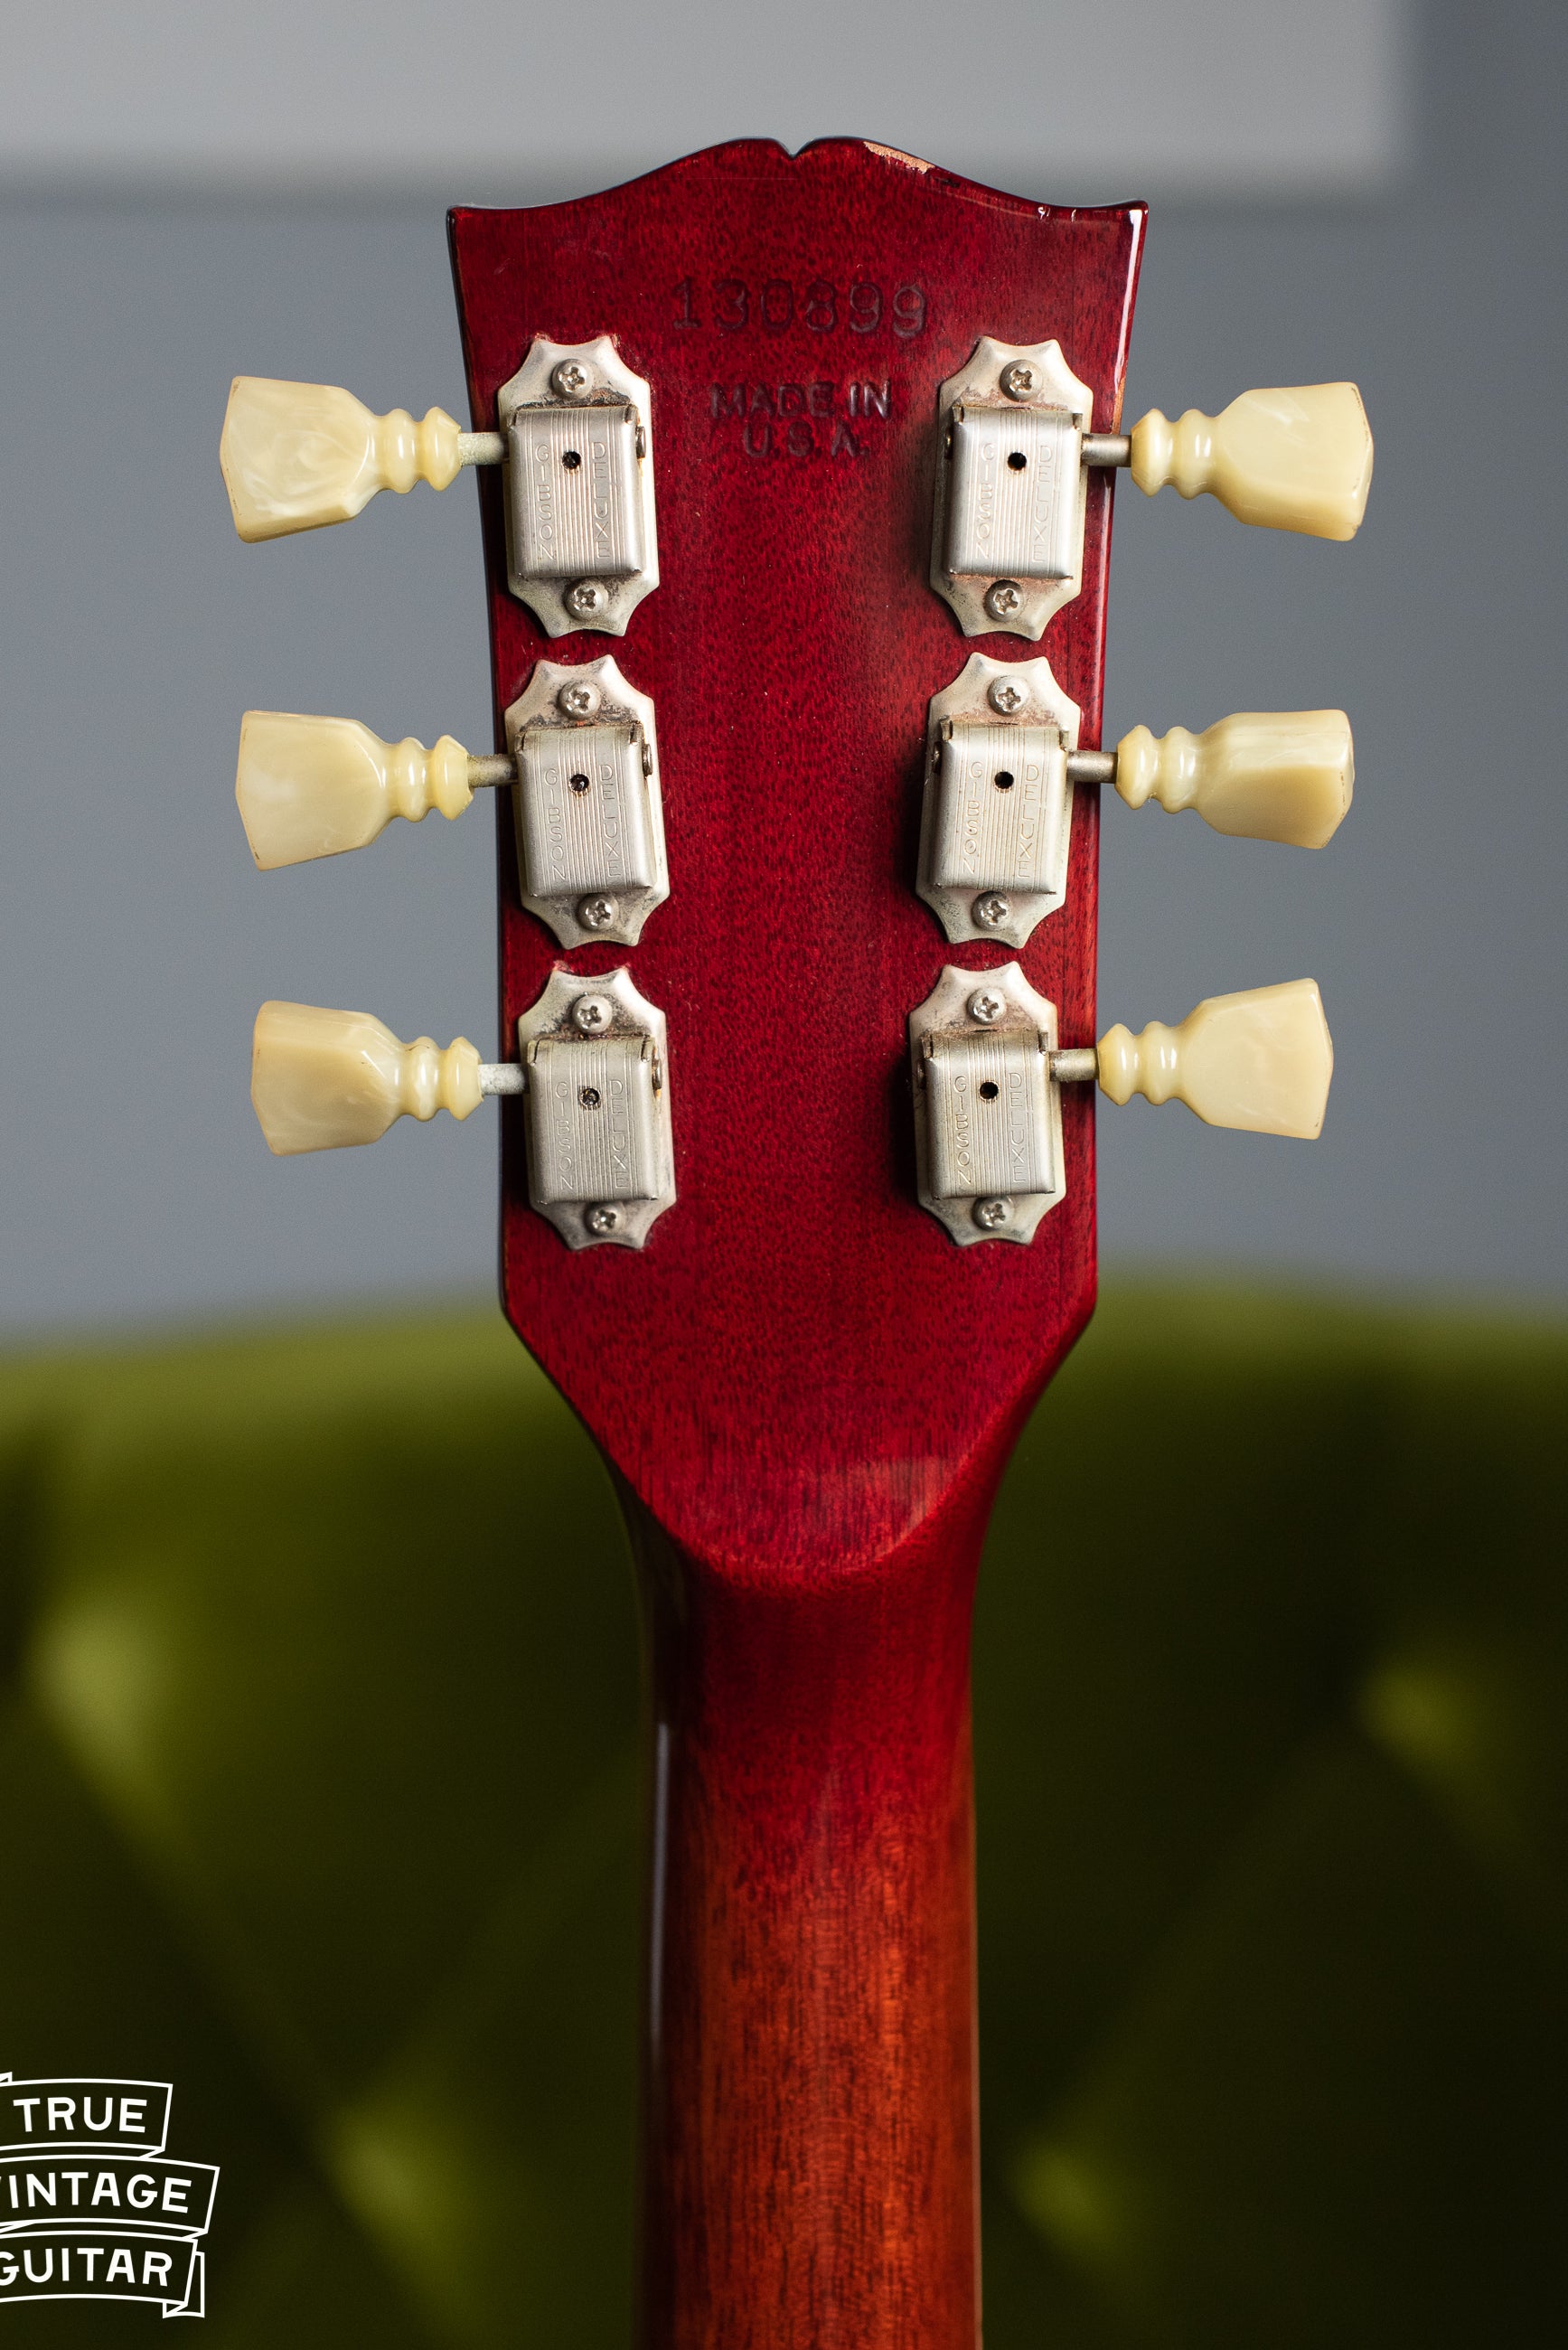 Mahogany neck, headstock, Kluson double line tuners, 1973 Gibson ES-335 TD Cherry